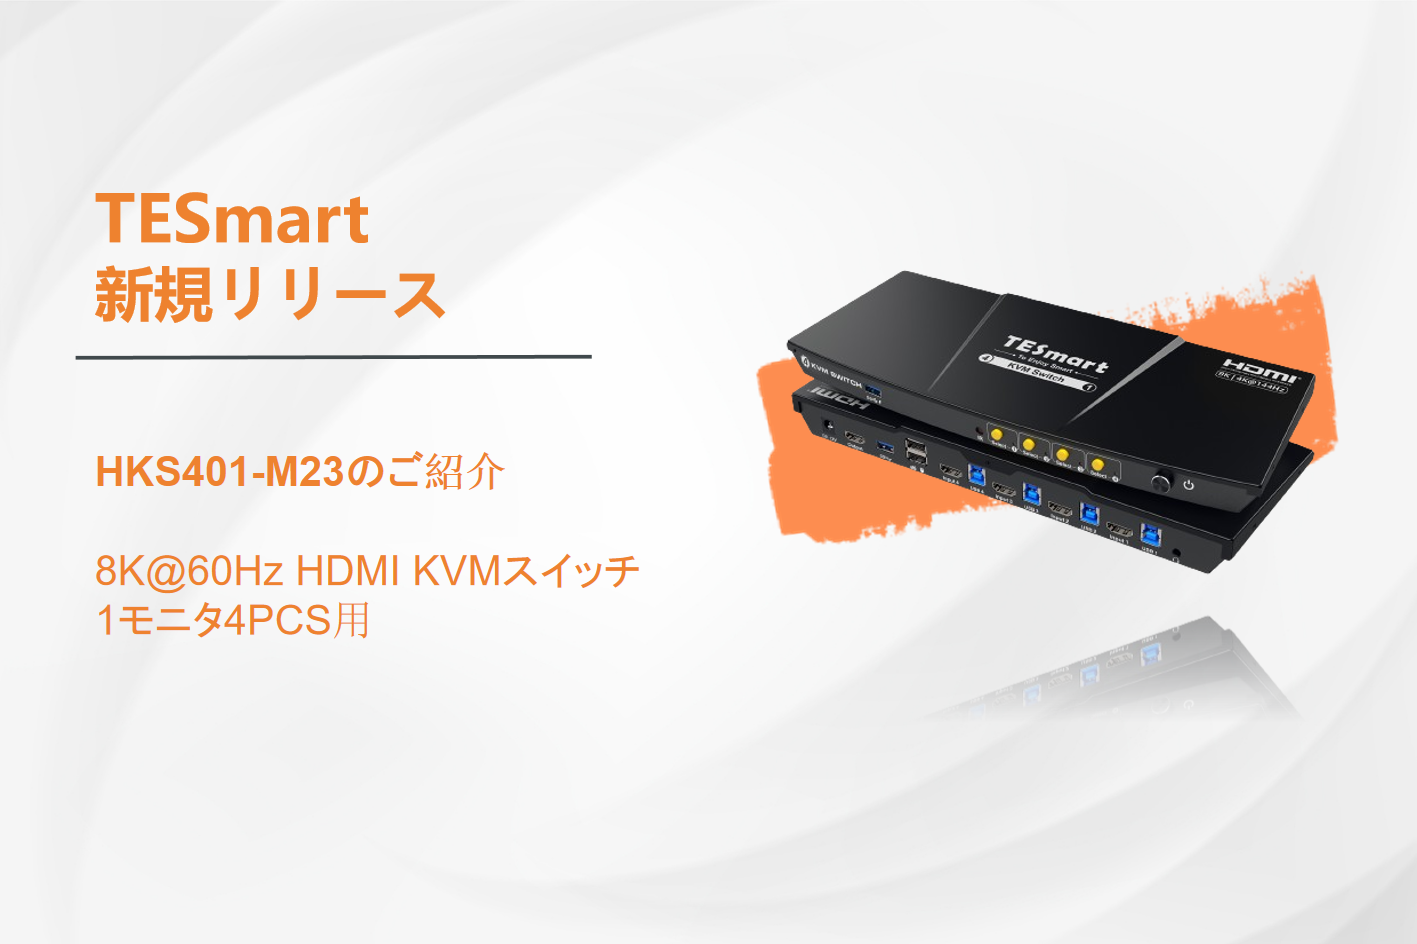 TESmart社、ホームオフィスやゲームでの生産性を向上させる1モニタ＆4コンピュータ用の新しい8K@60Hz HDMI KVMスイッチを発表